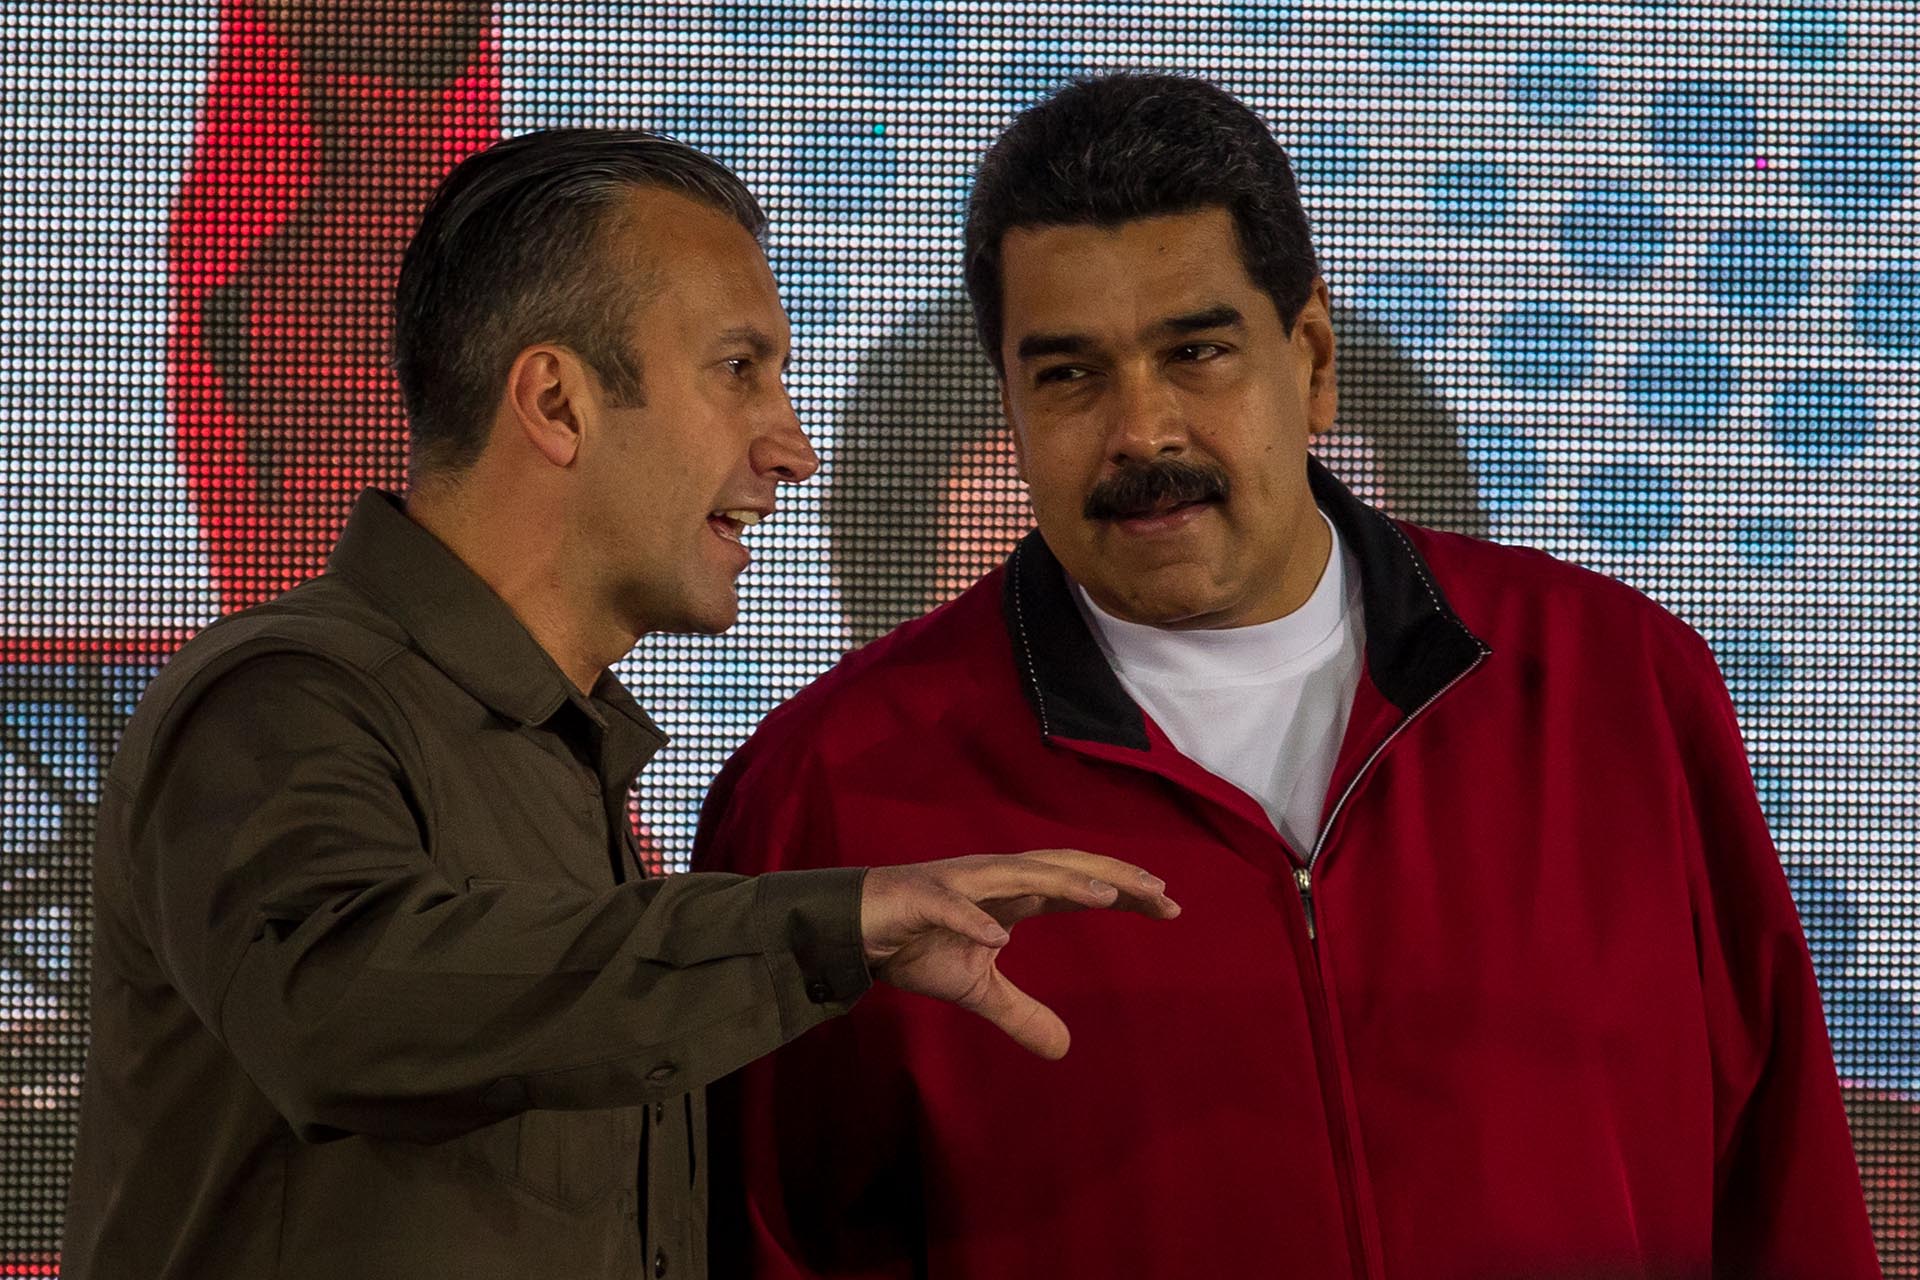 Un ex ministro de Chávez reveló que Maduro descubrió un plan de Tareck El Aissami para disputarle el poder: “Va por su cabeza”